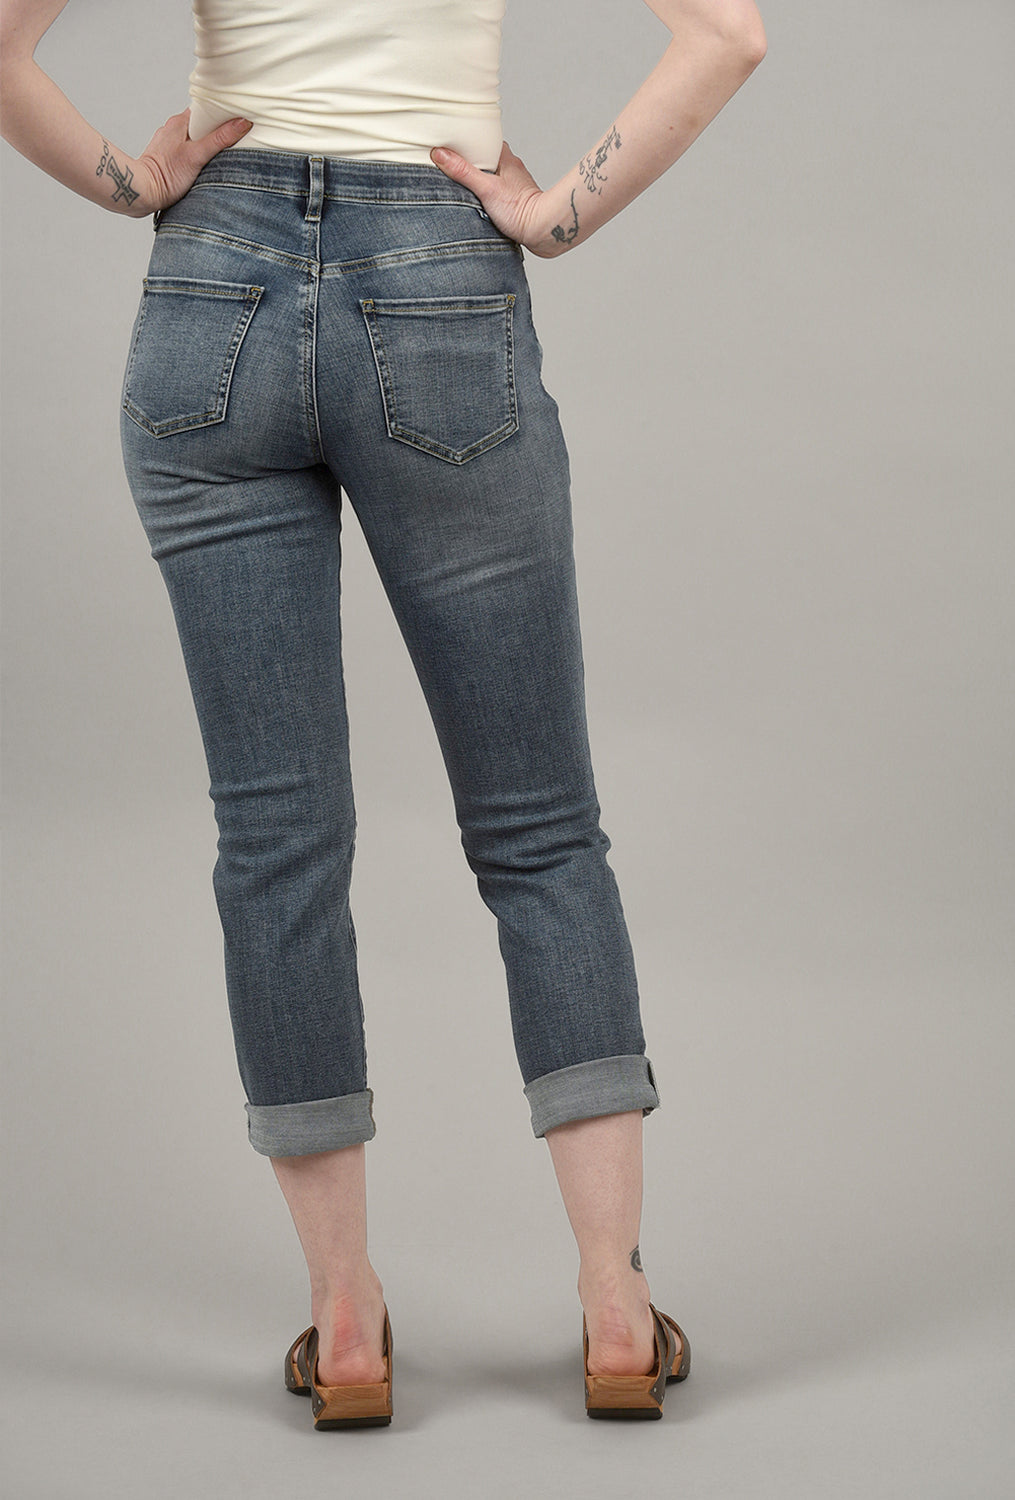 Carter Girlfriend Jeans, Vintage